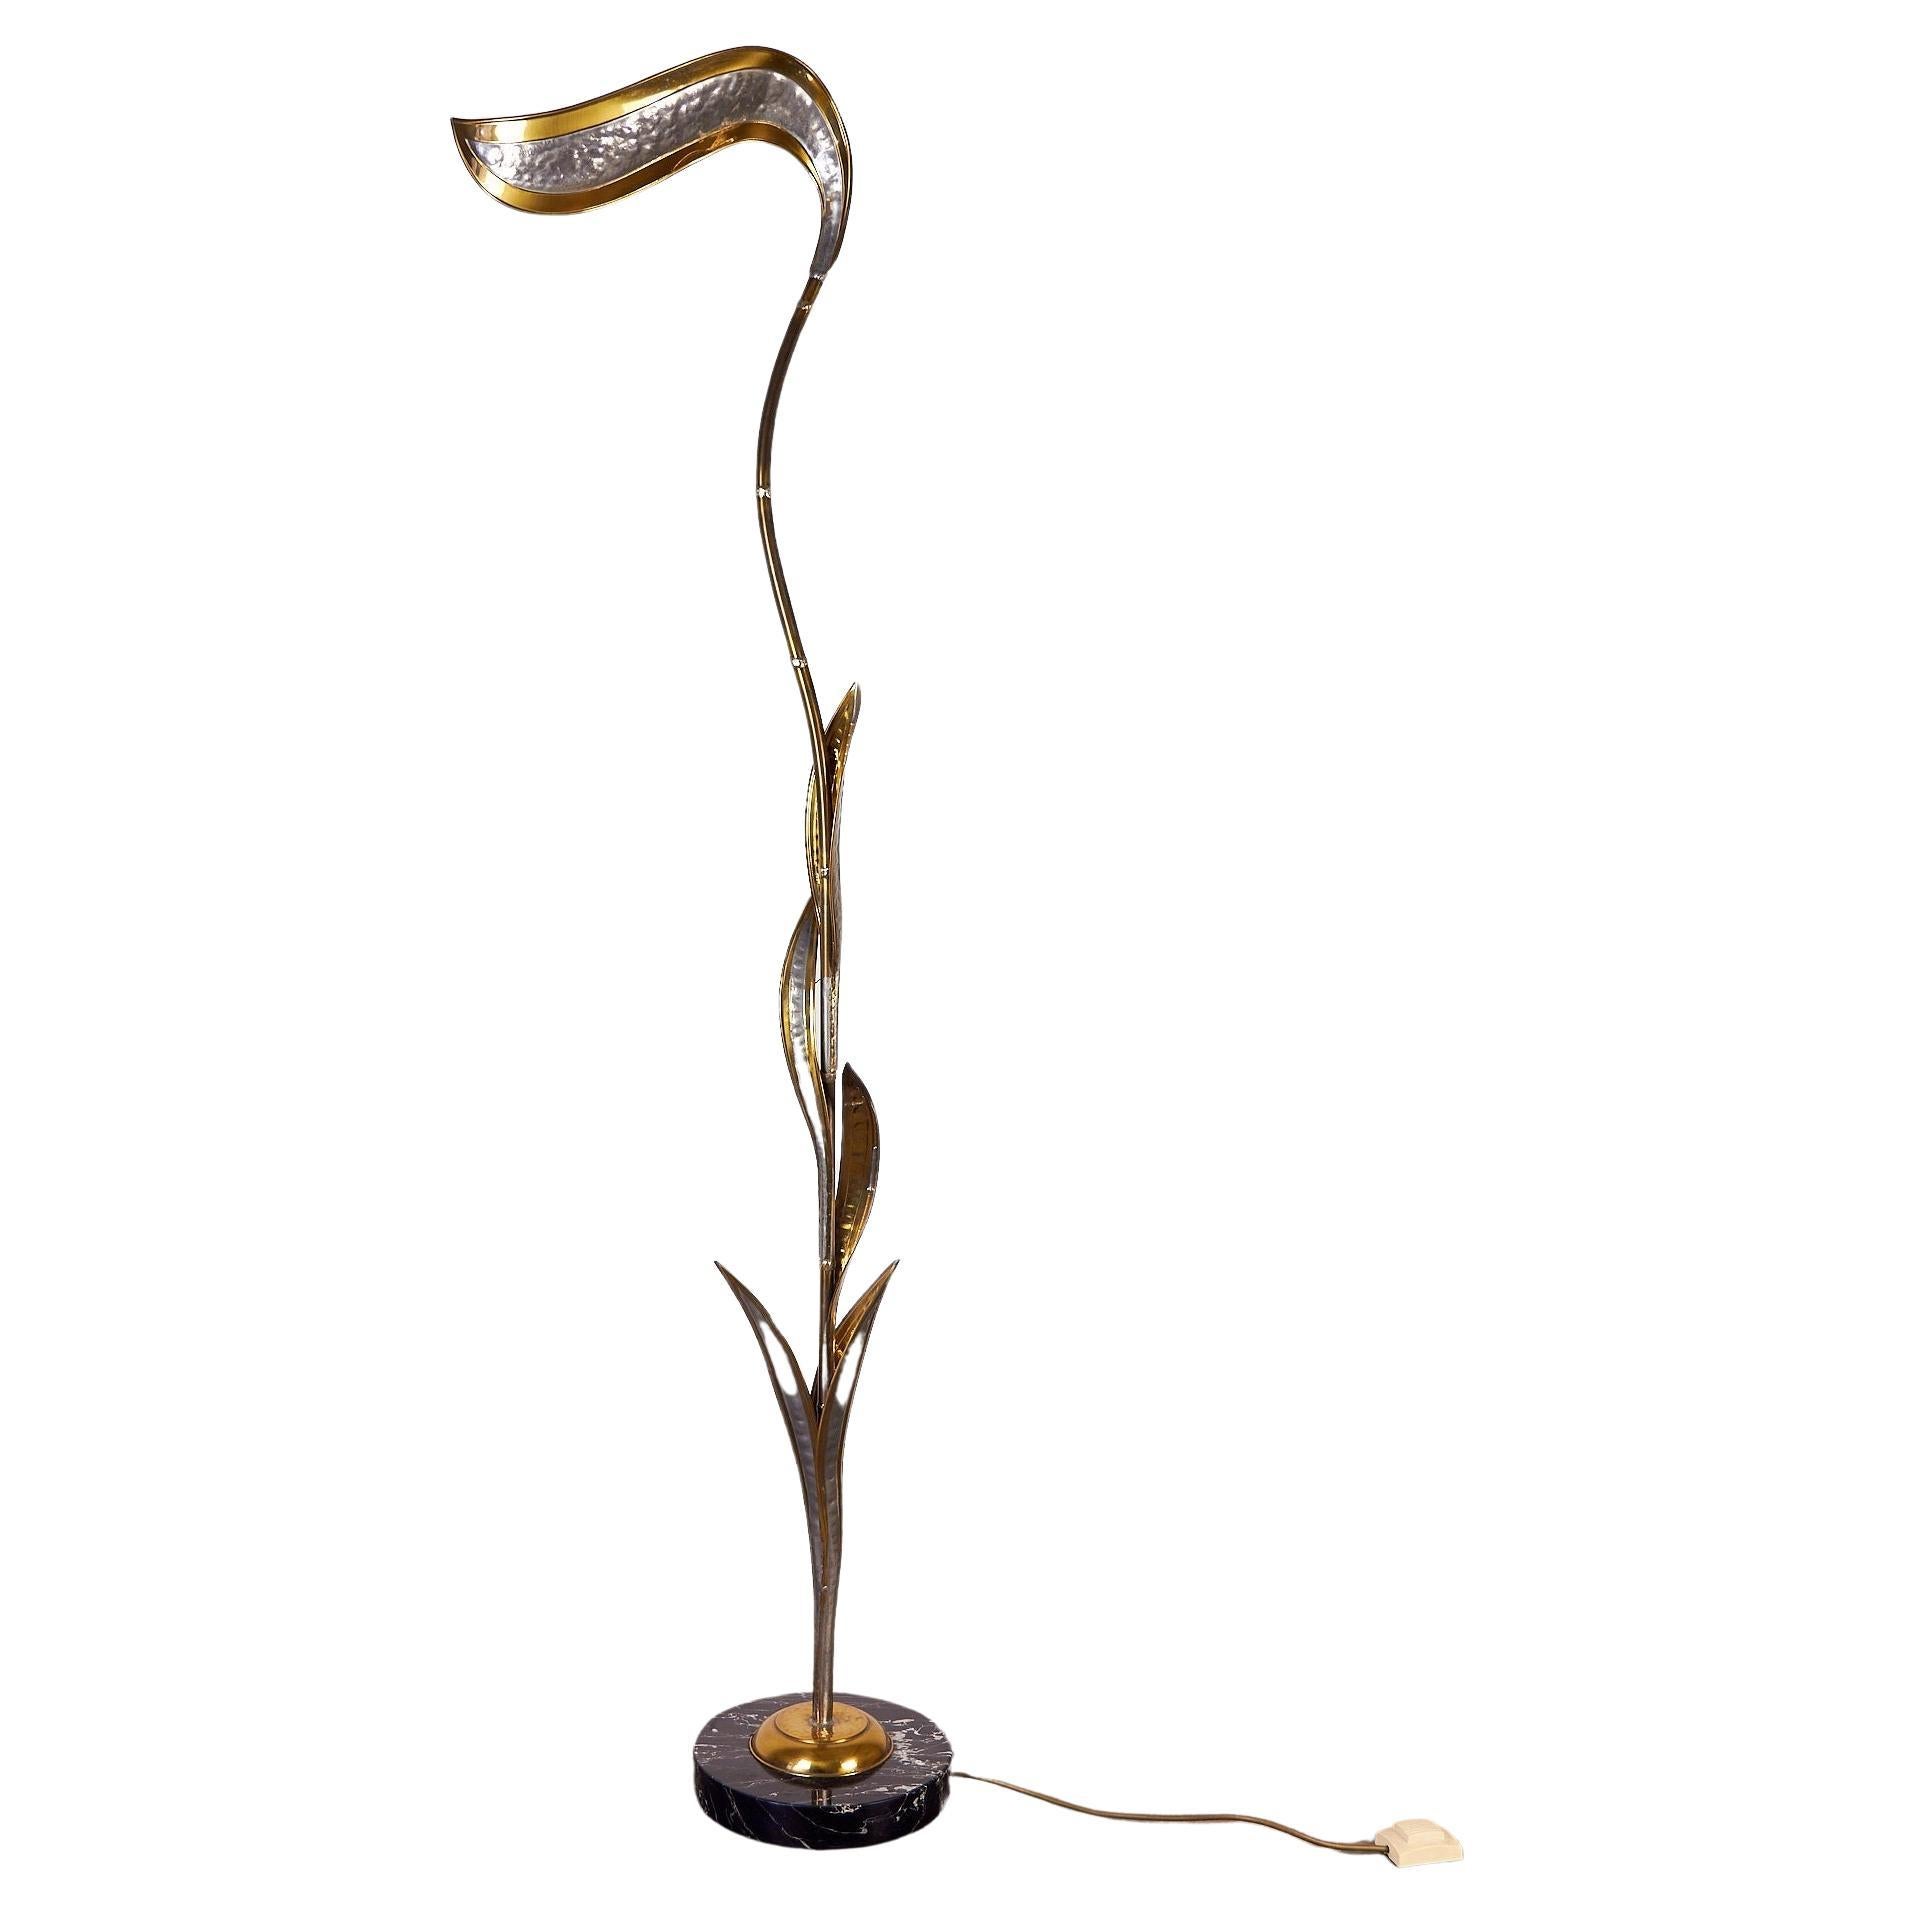 Brass floral lamp "Maison Jansen" 1970s